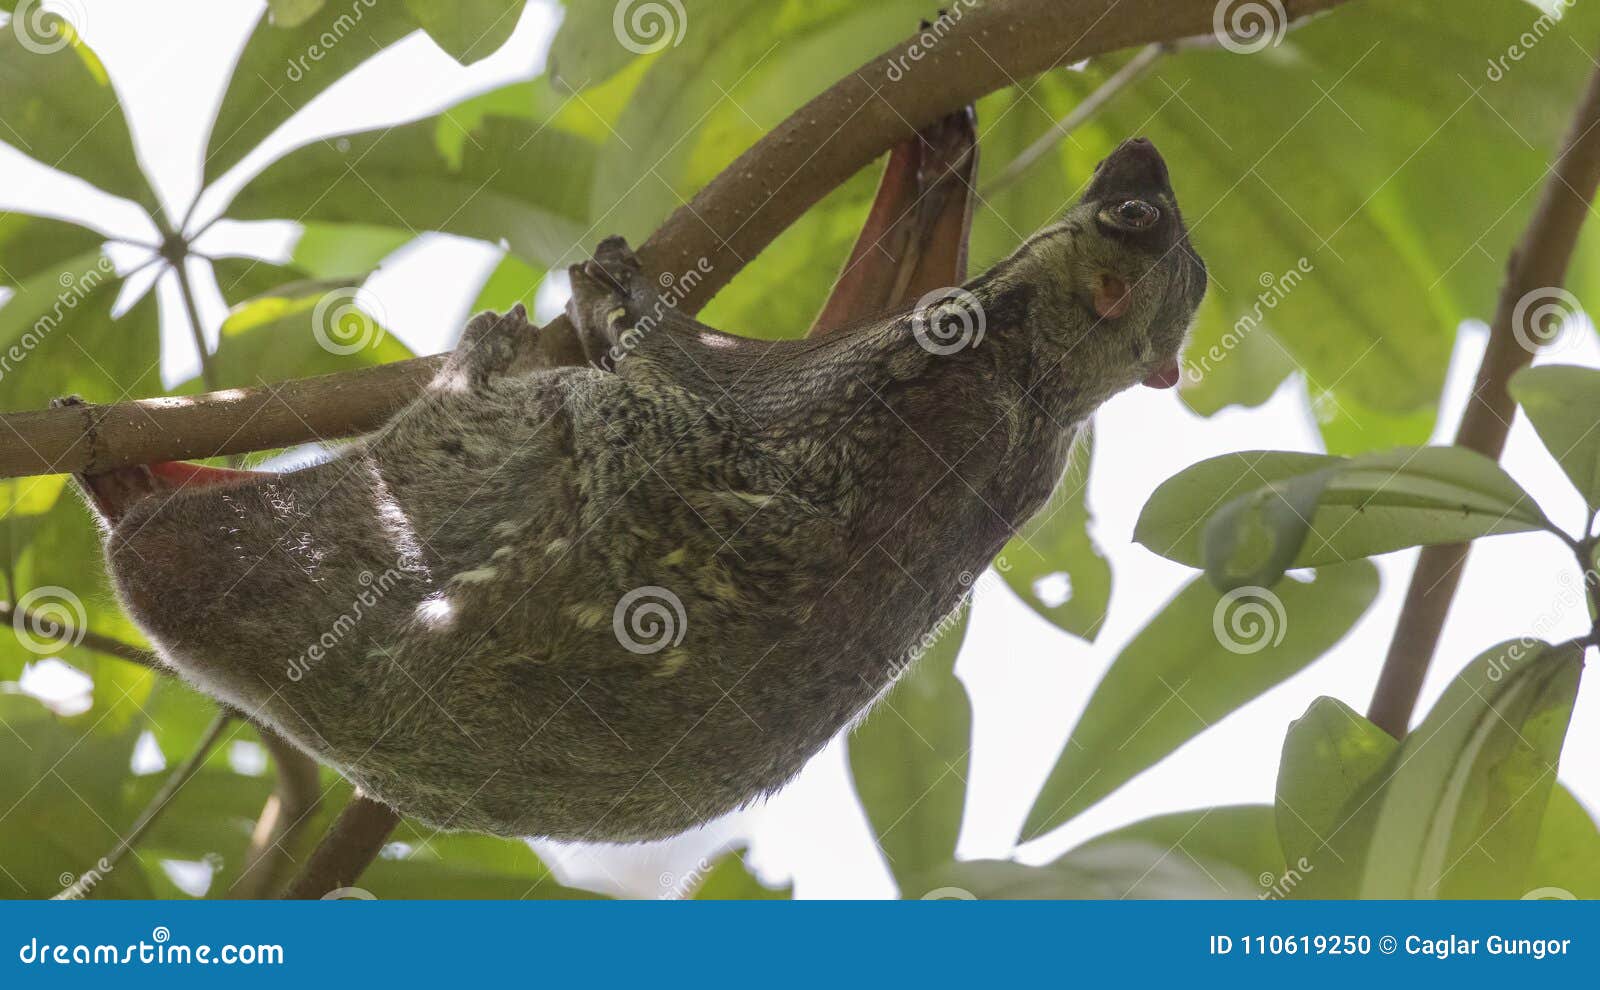 sunda flying lemur on tree